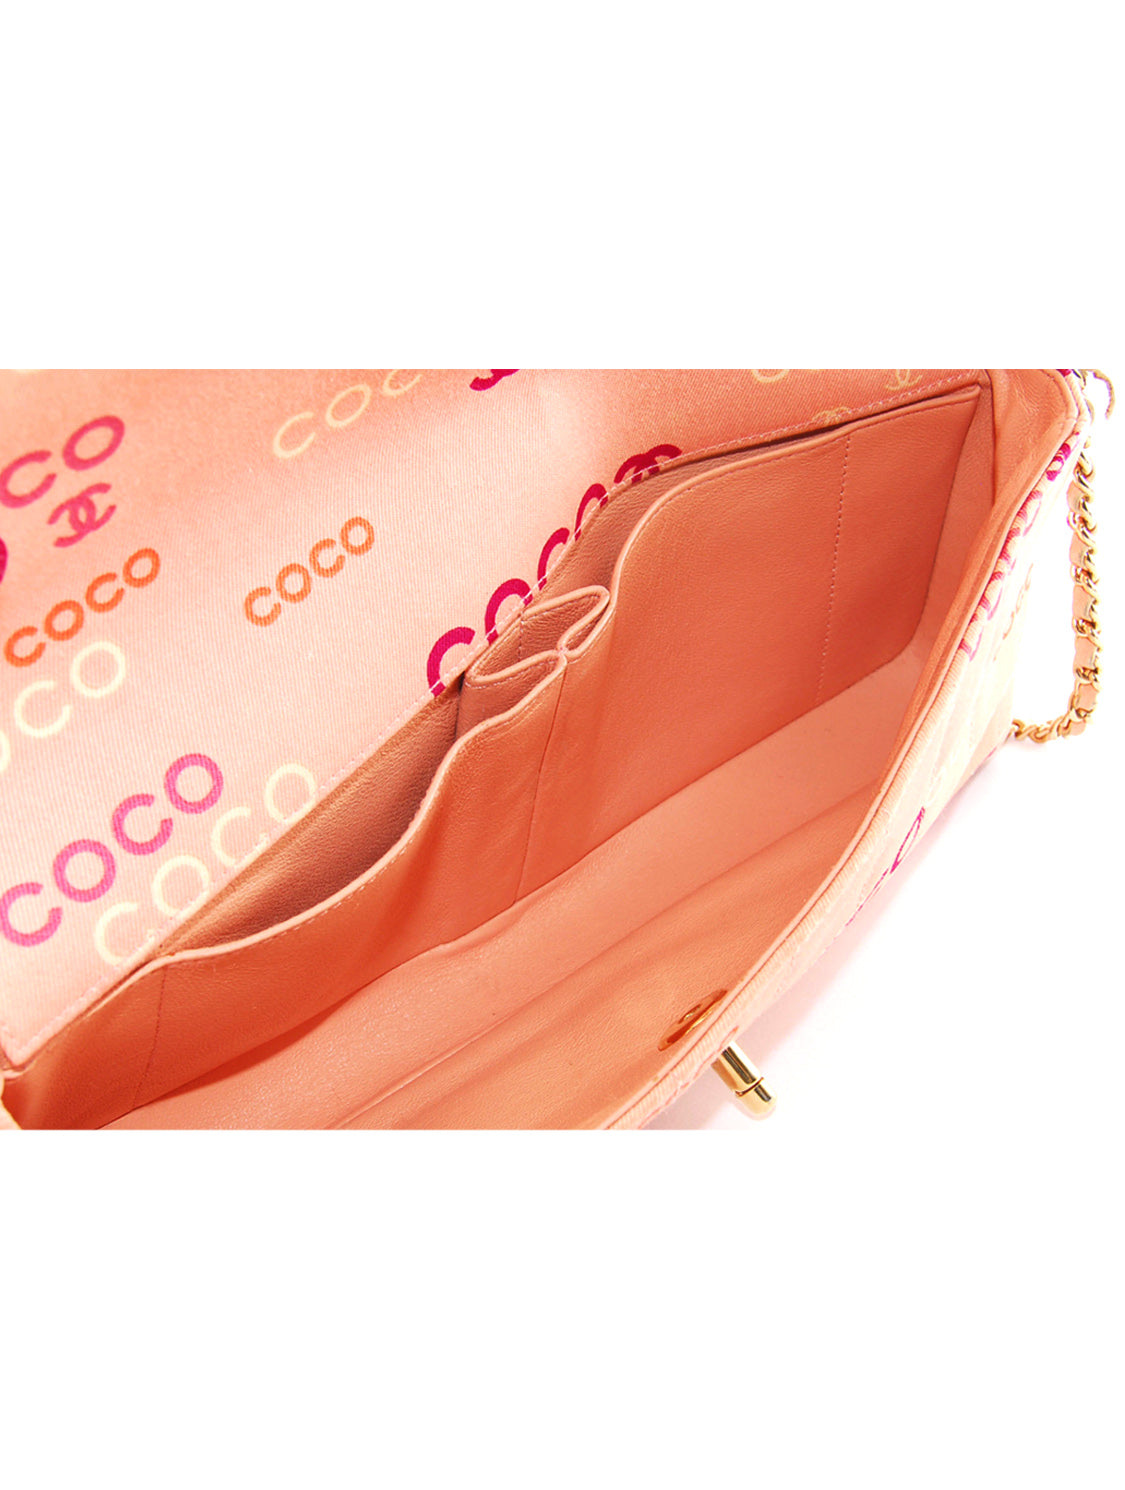 chanel coco pink｜TikTok Search